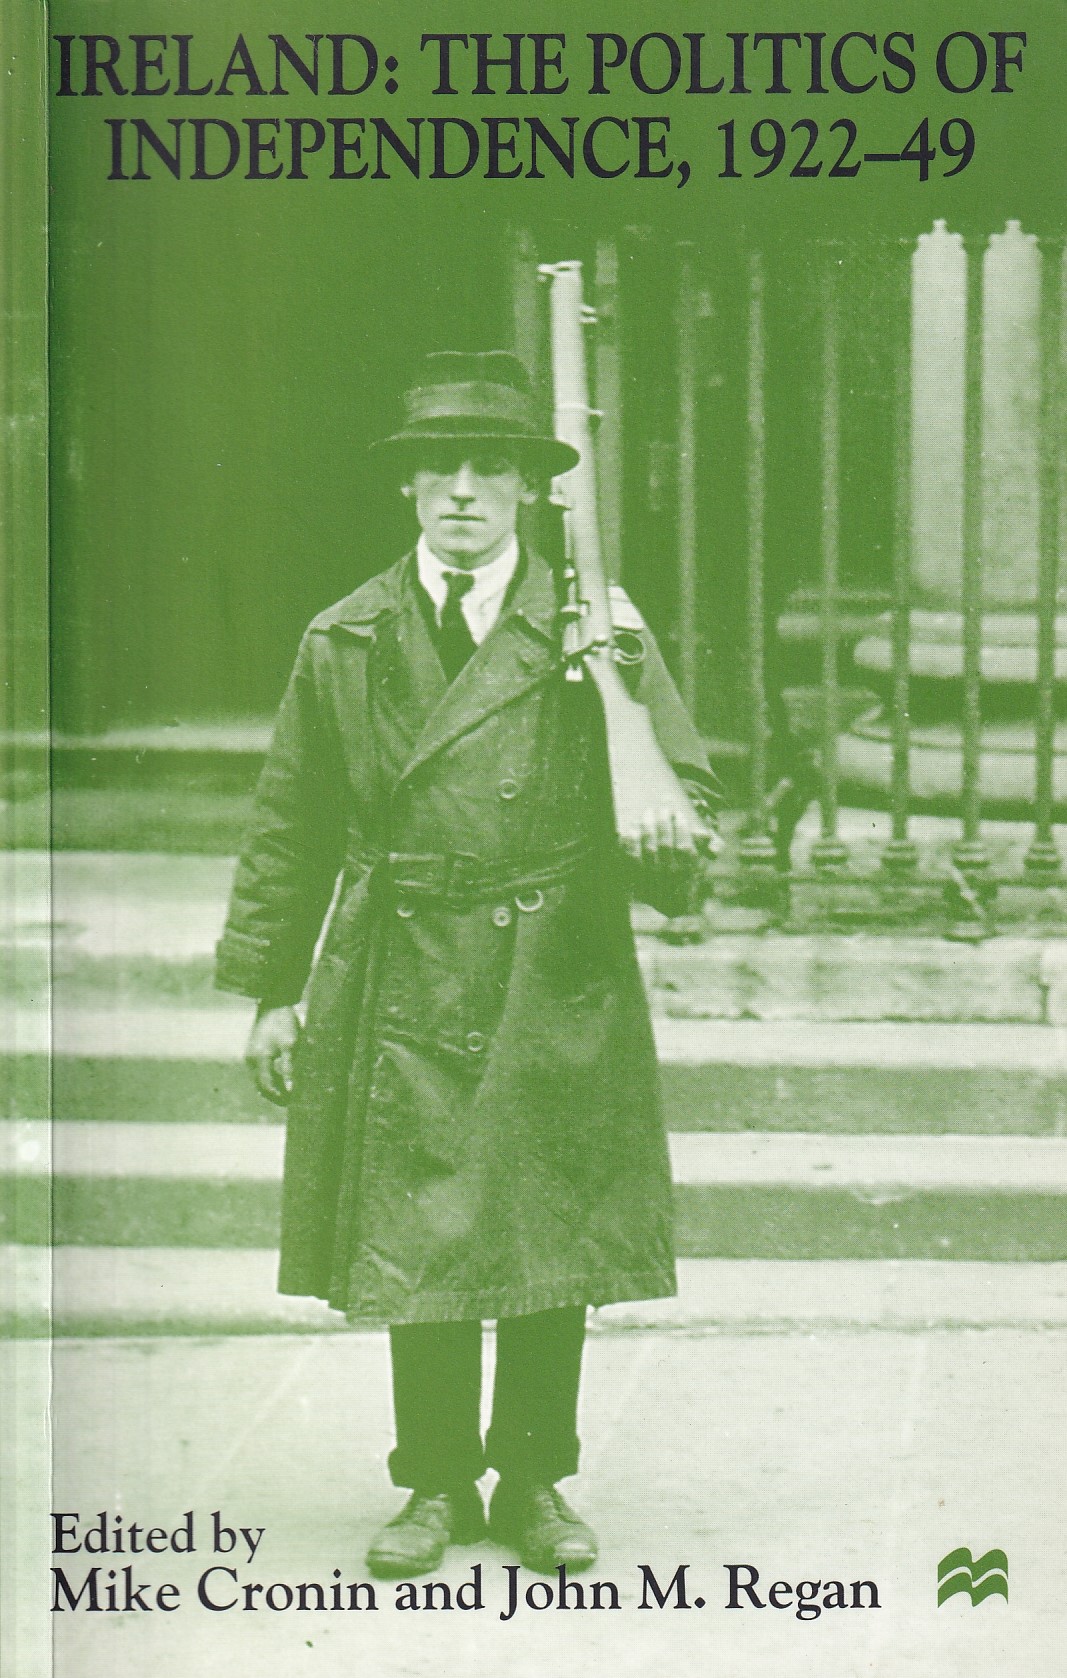 Ireland: The Politics of Independence, 1922-49 by Mike Cronin & John M. Regan (eds.)